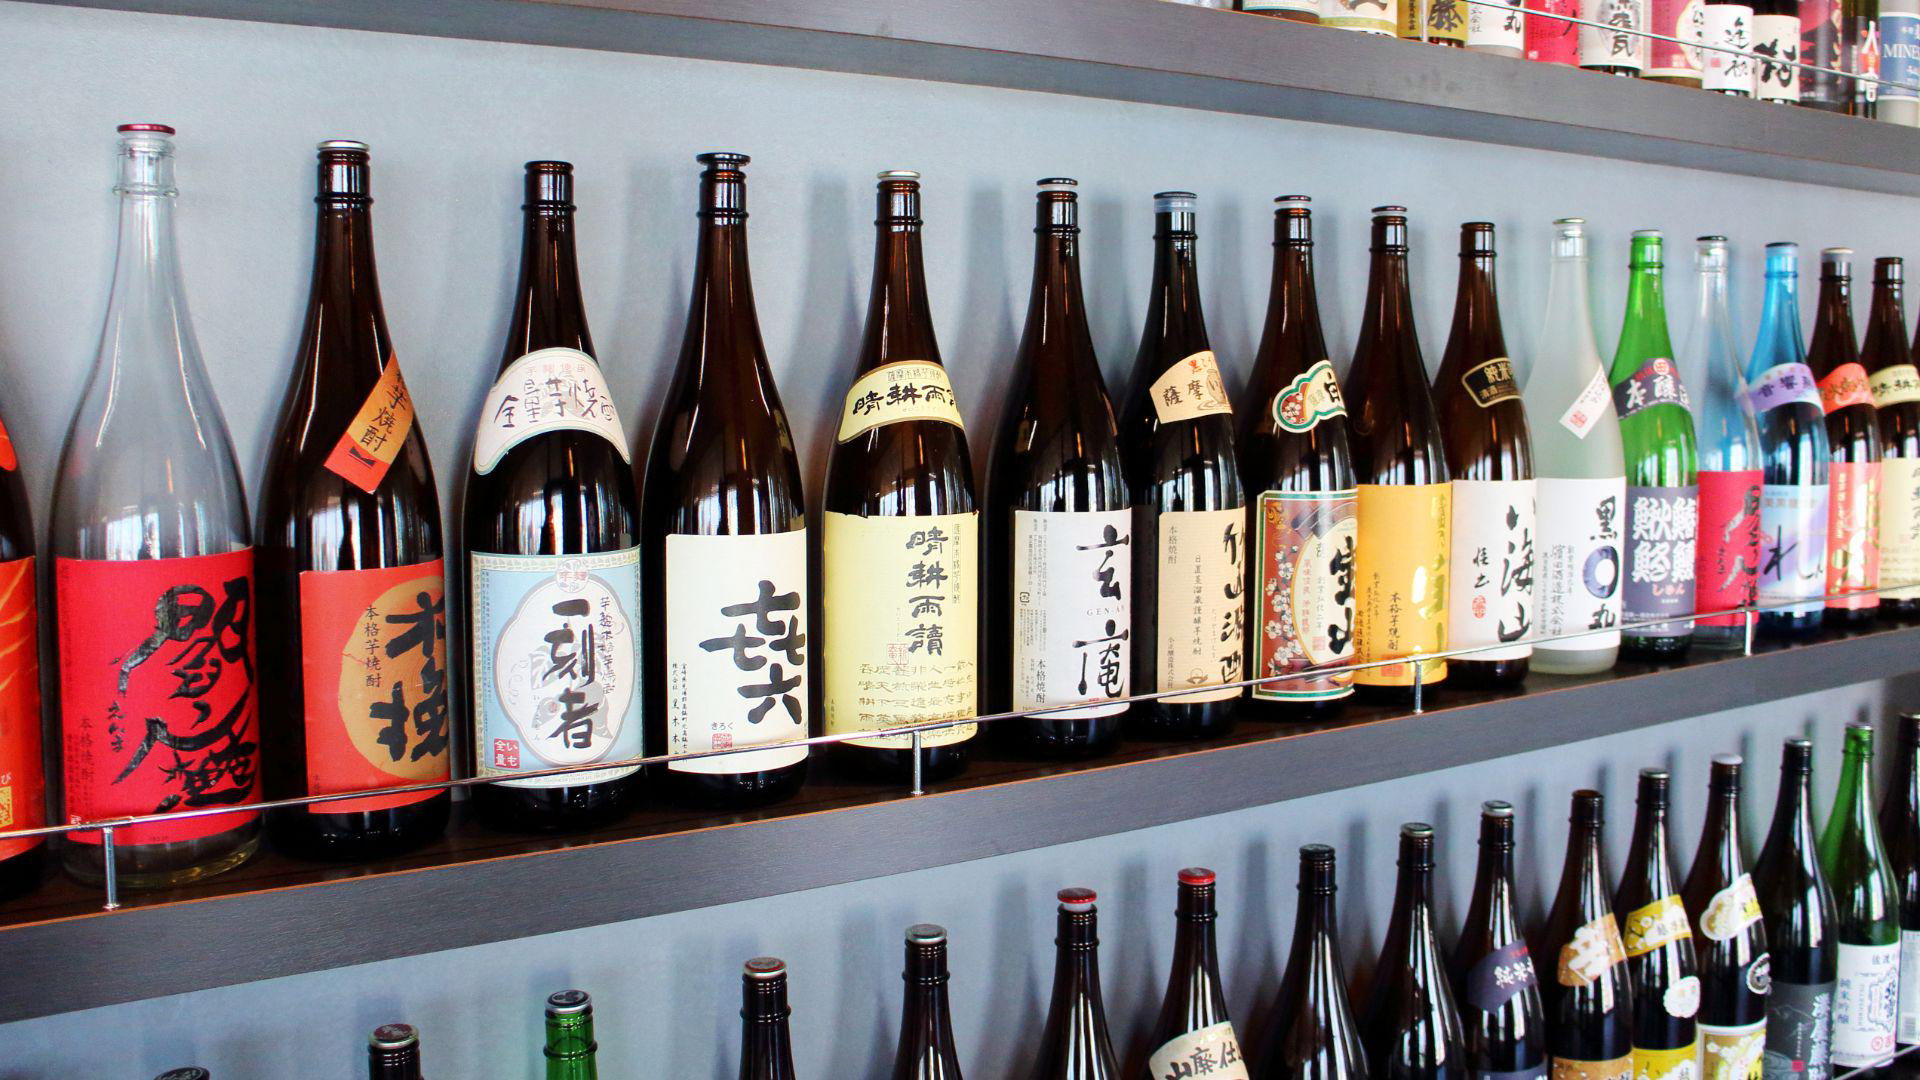 Where To Buy Sake In Tokyo: 5 Shops to Begin Your Sake Journey